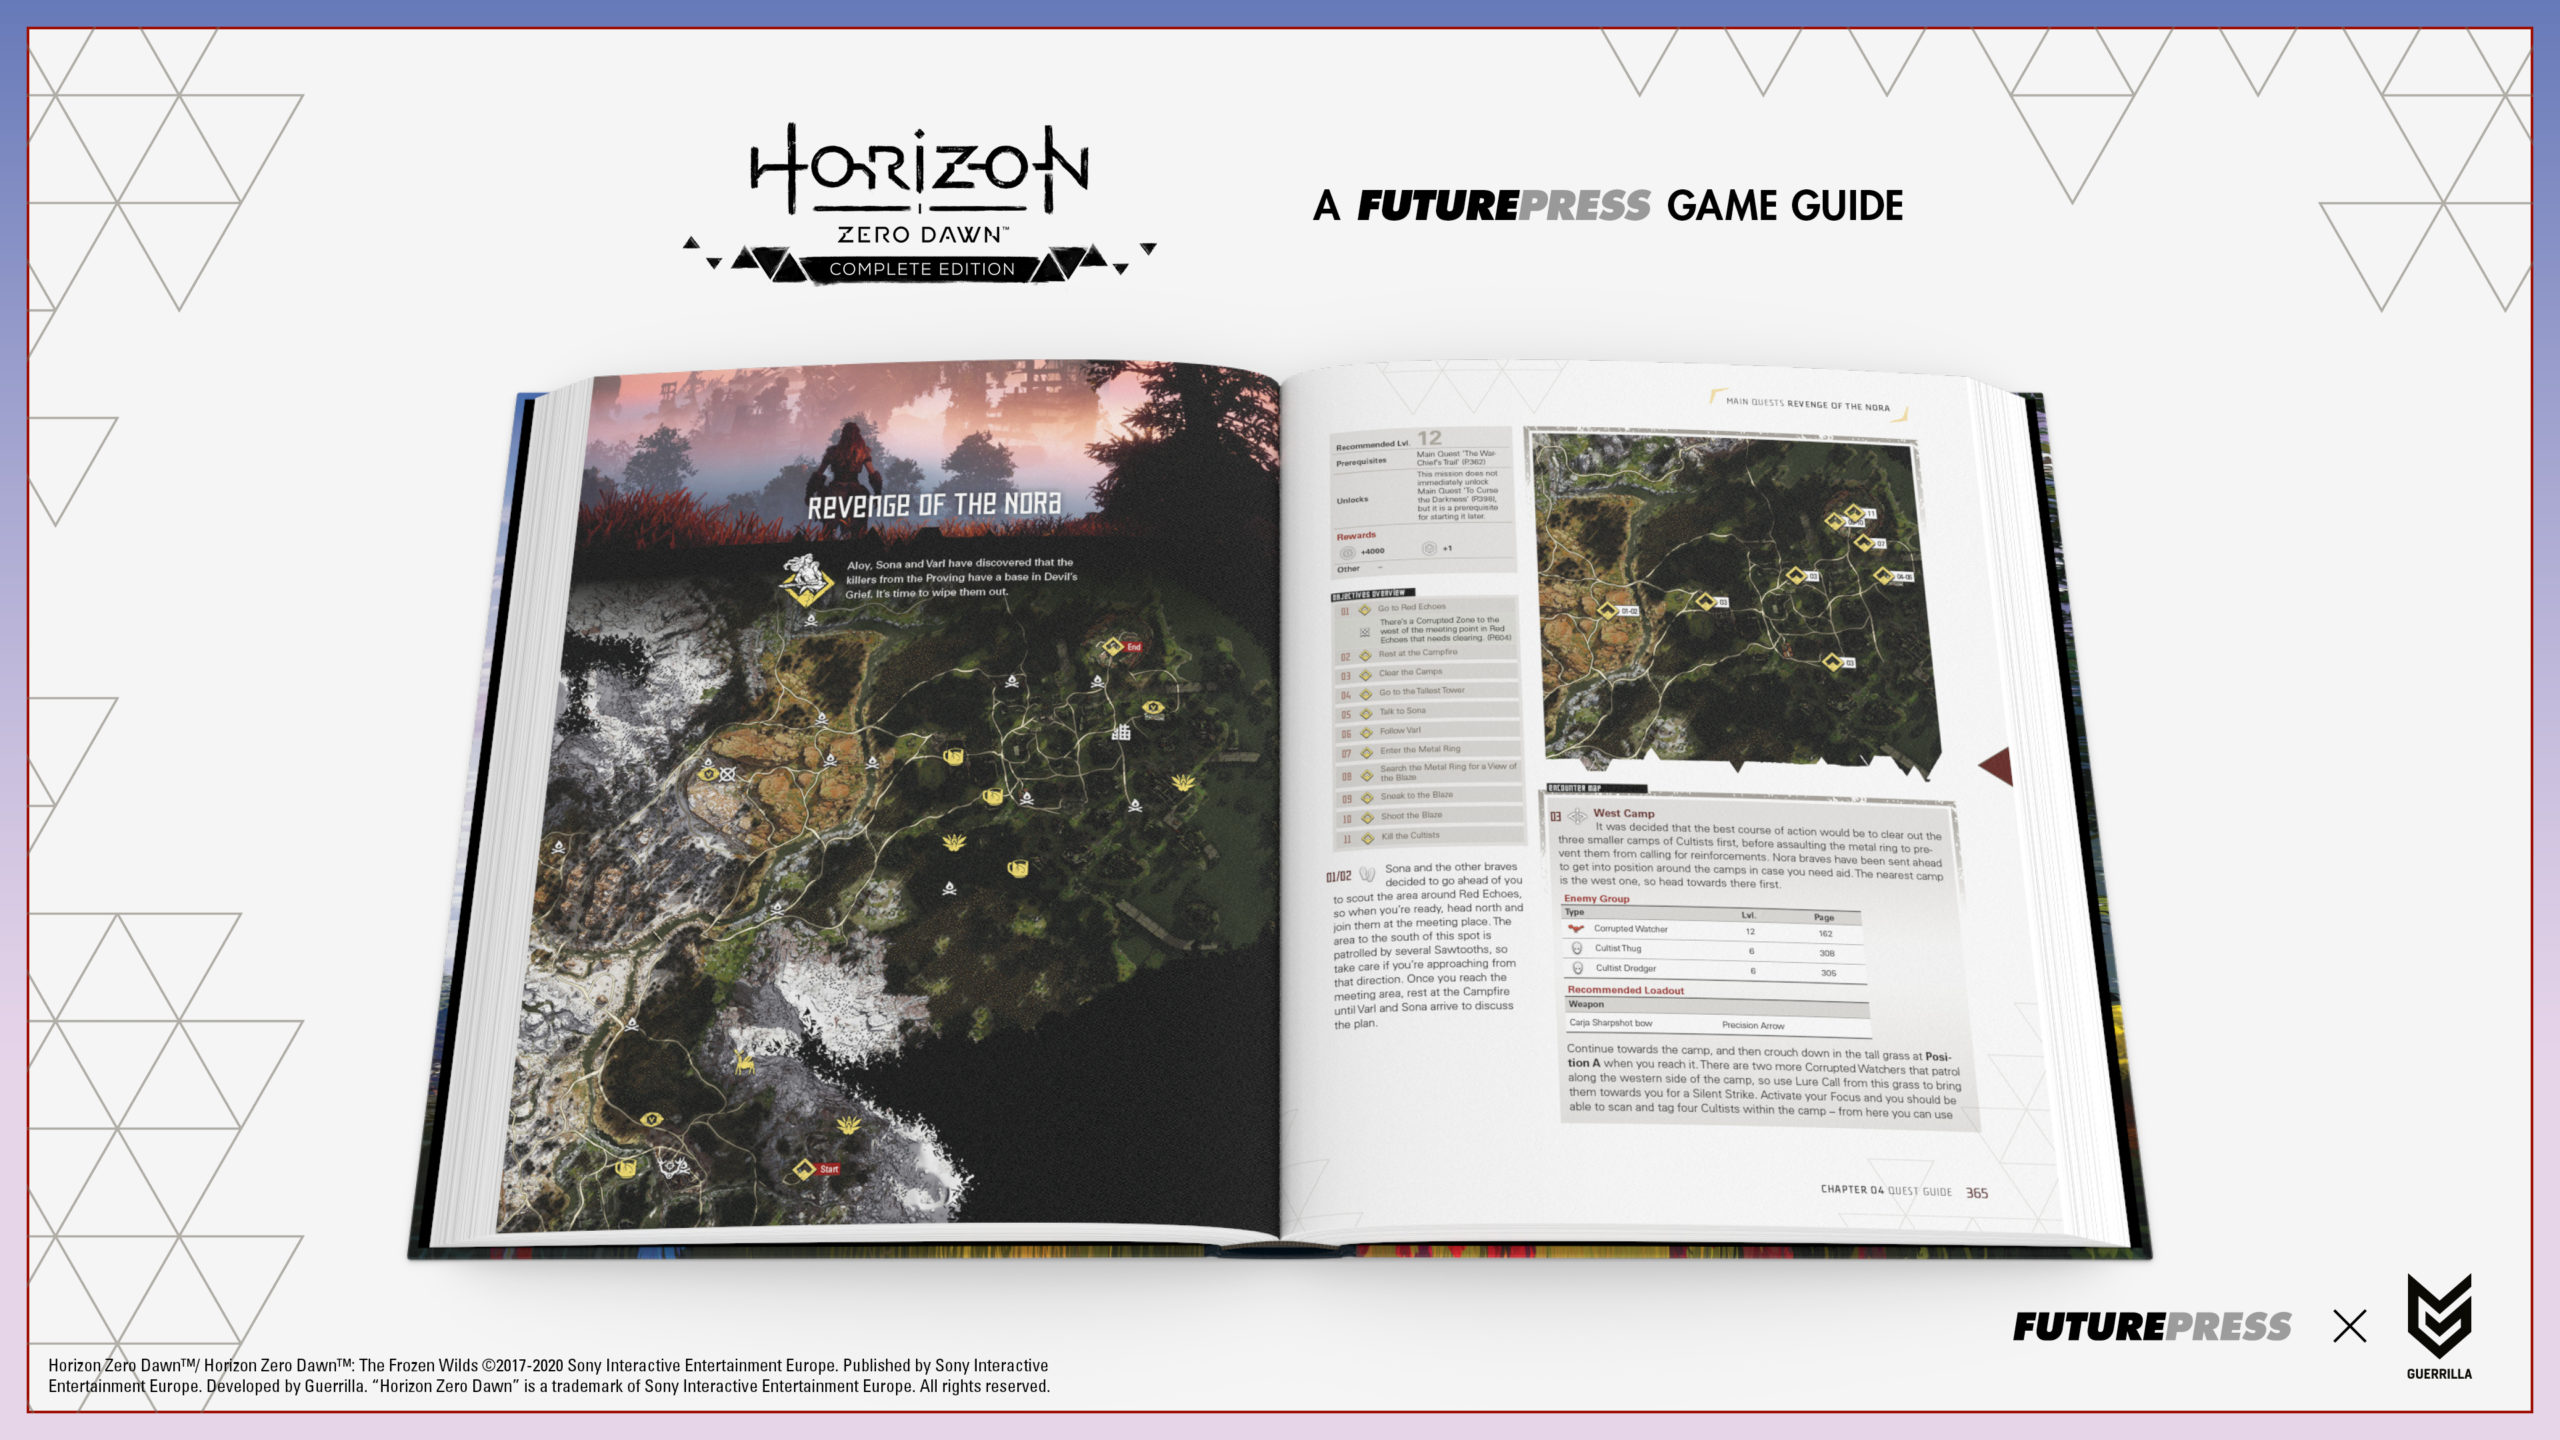 Horizon Zero Dawn - Strategy Guide eBook by GamerGuides.com - EPUB Book